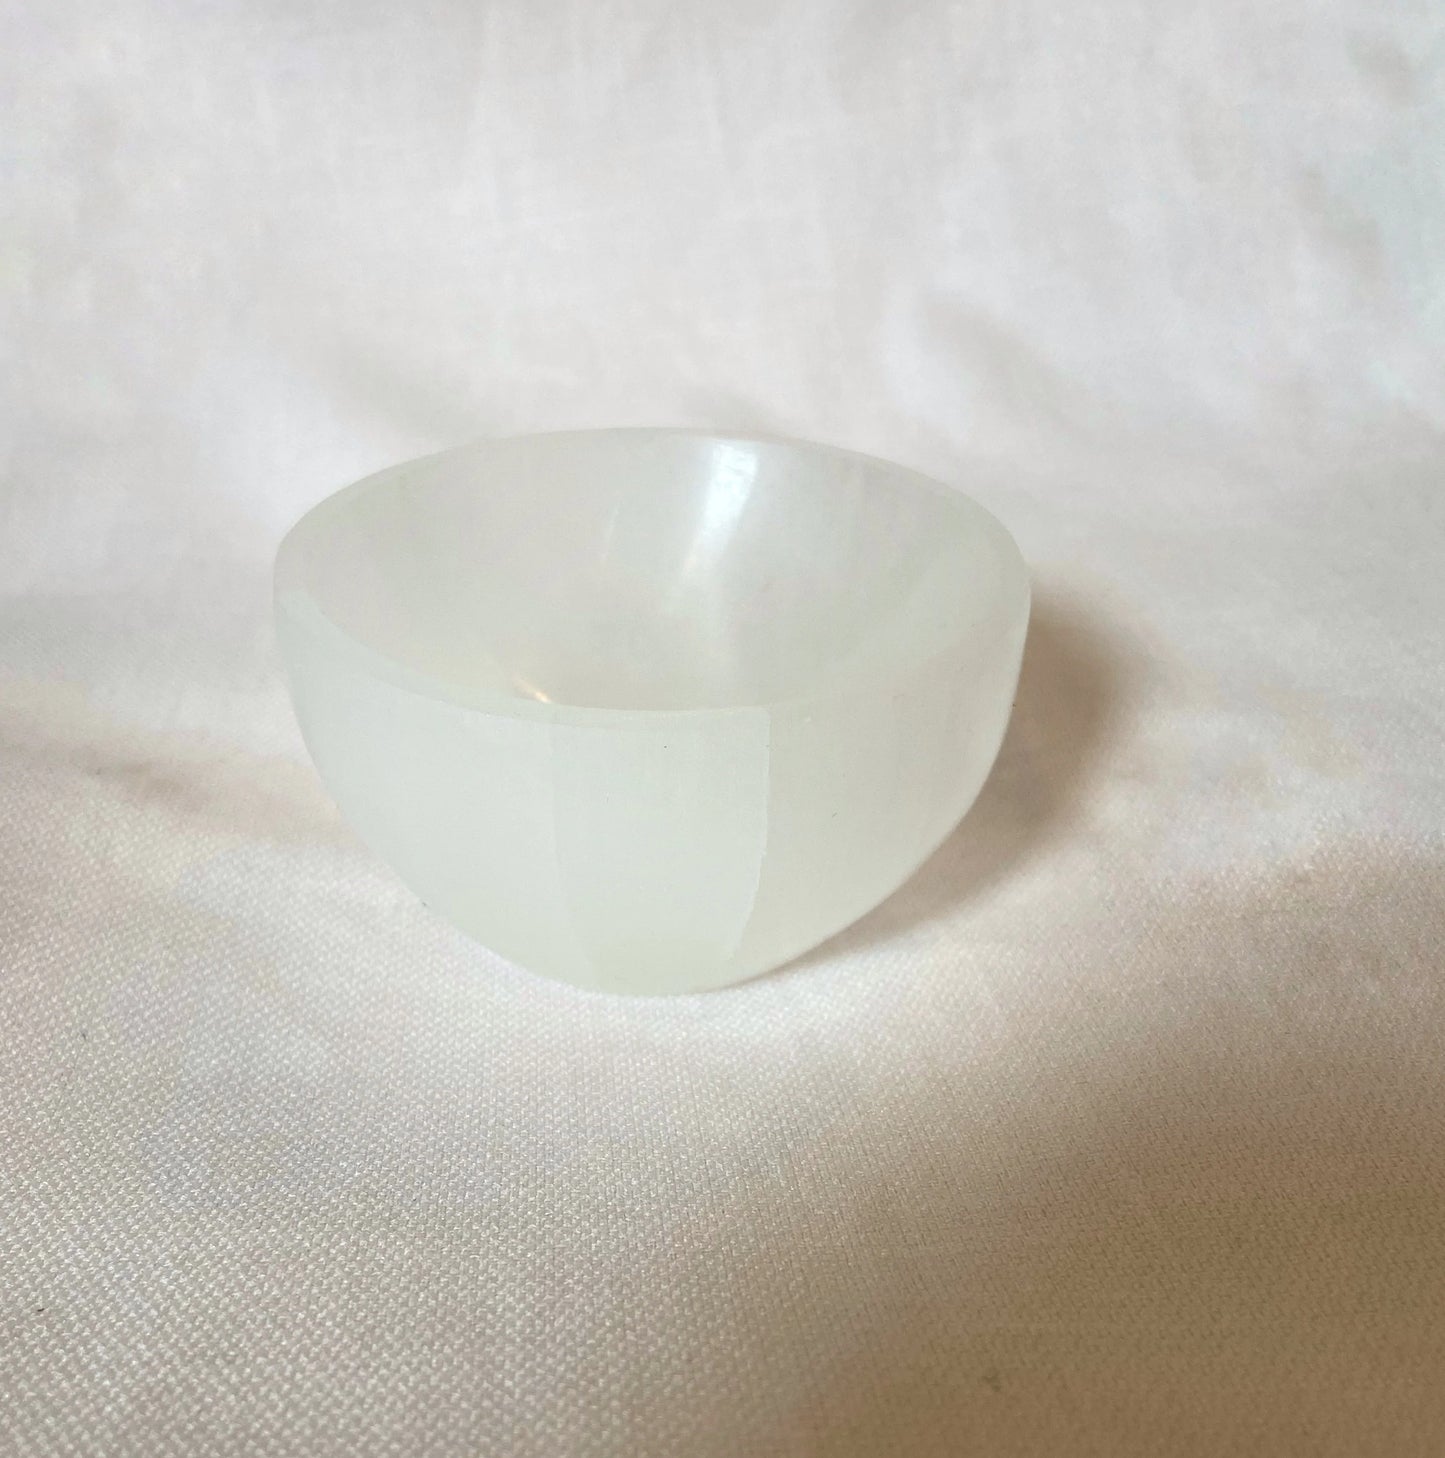 Small Polished Selenite Charging Crystal Bowl